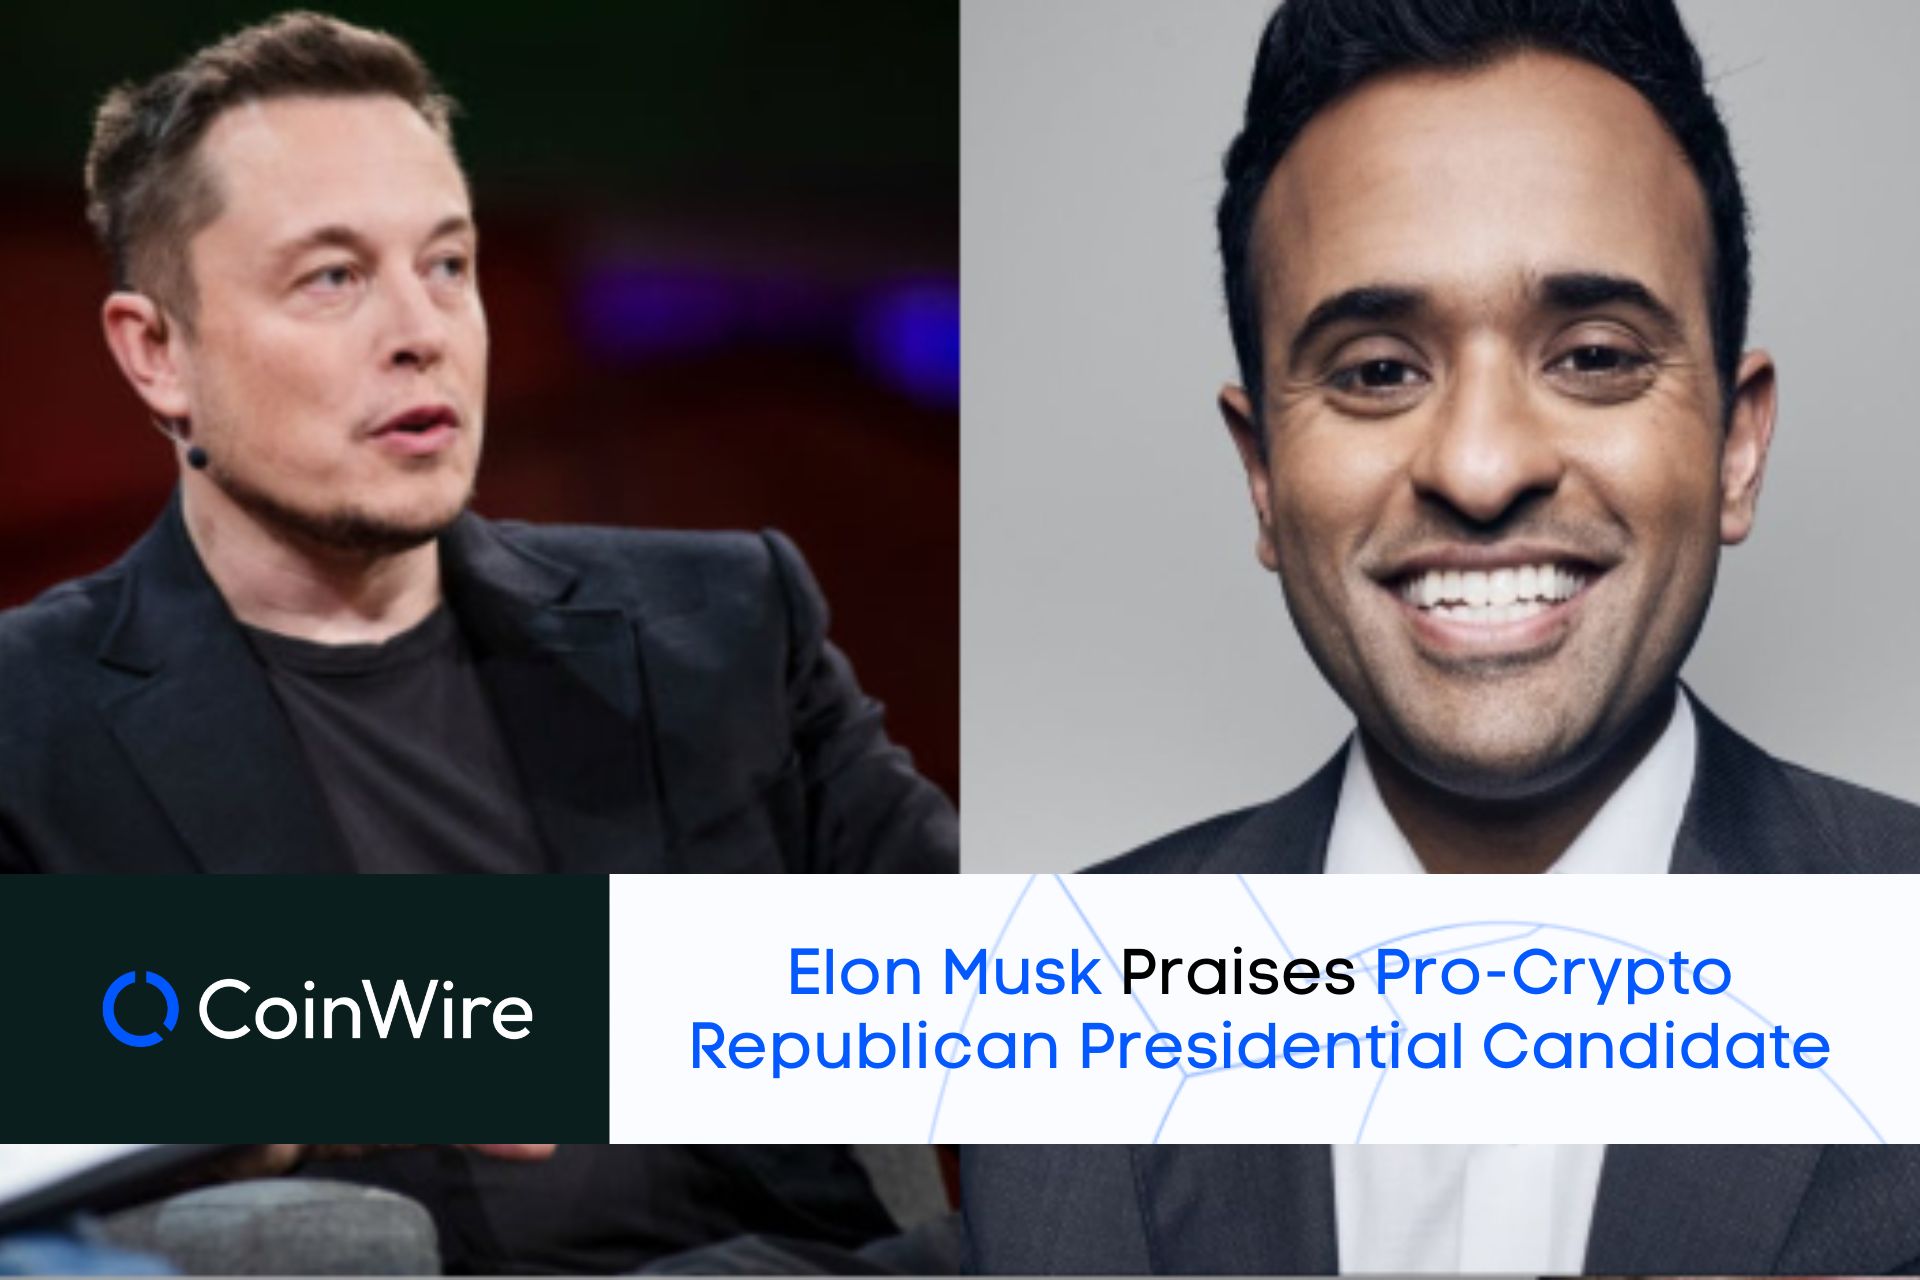 Elon Musk Praises Pro-Crypto Republican Presidential Candidate